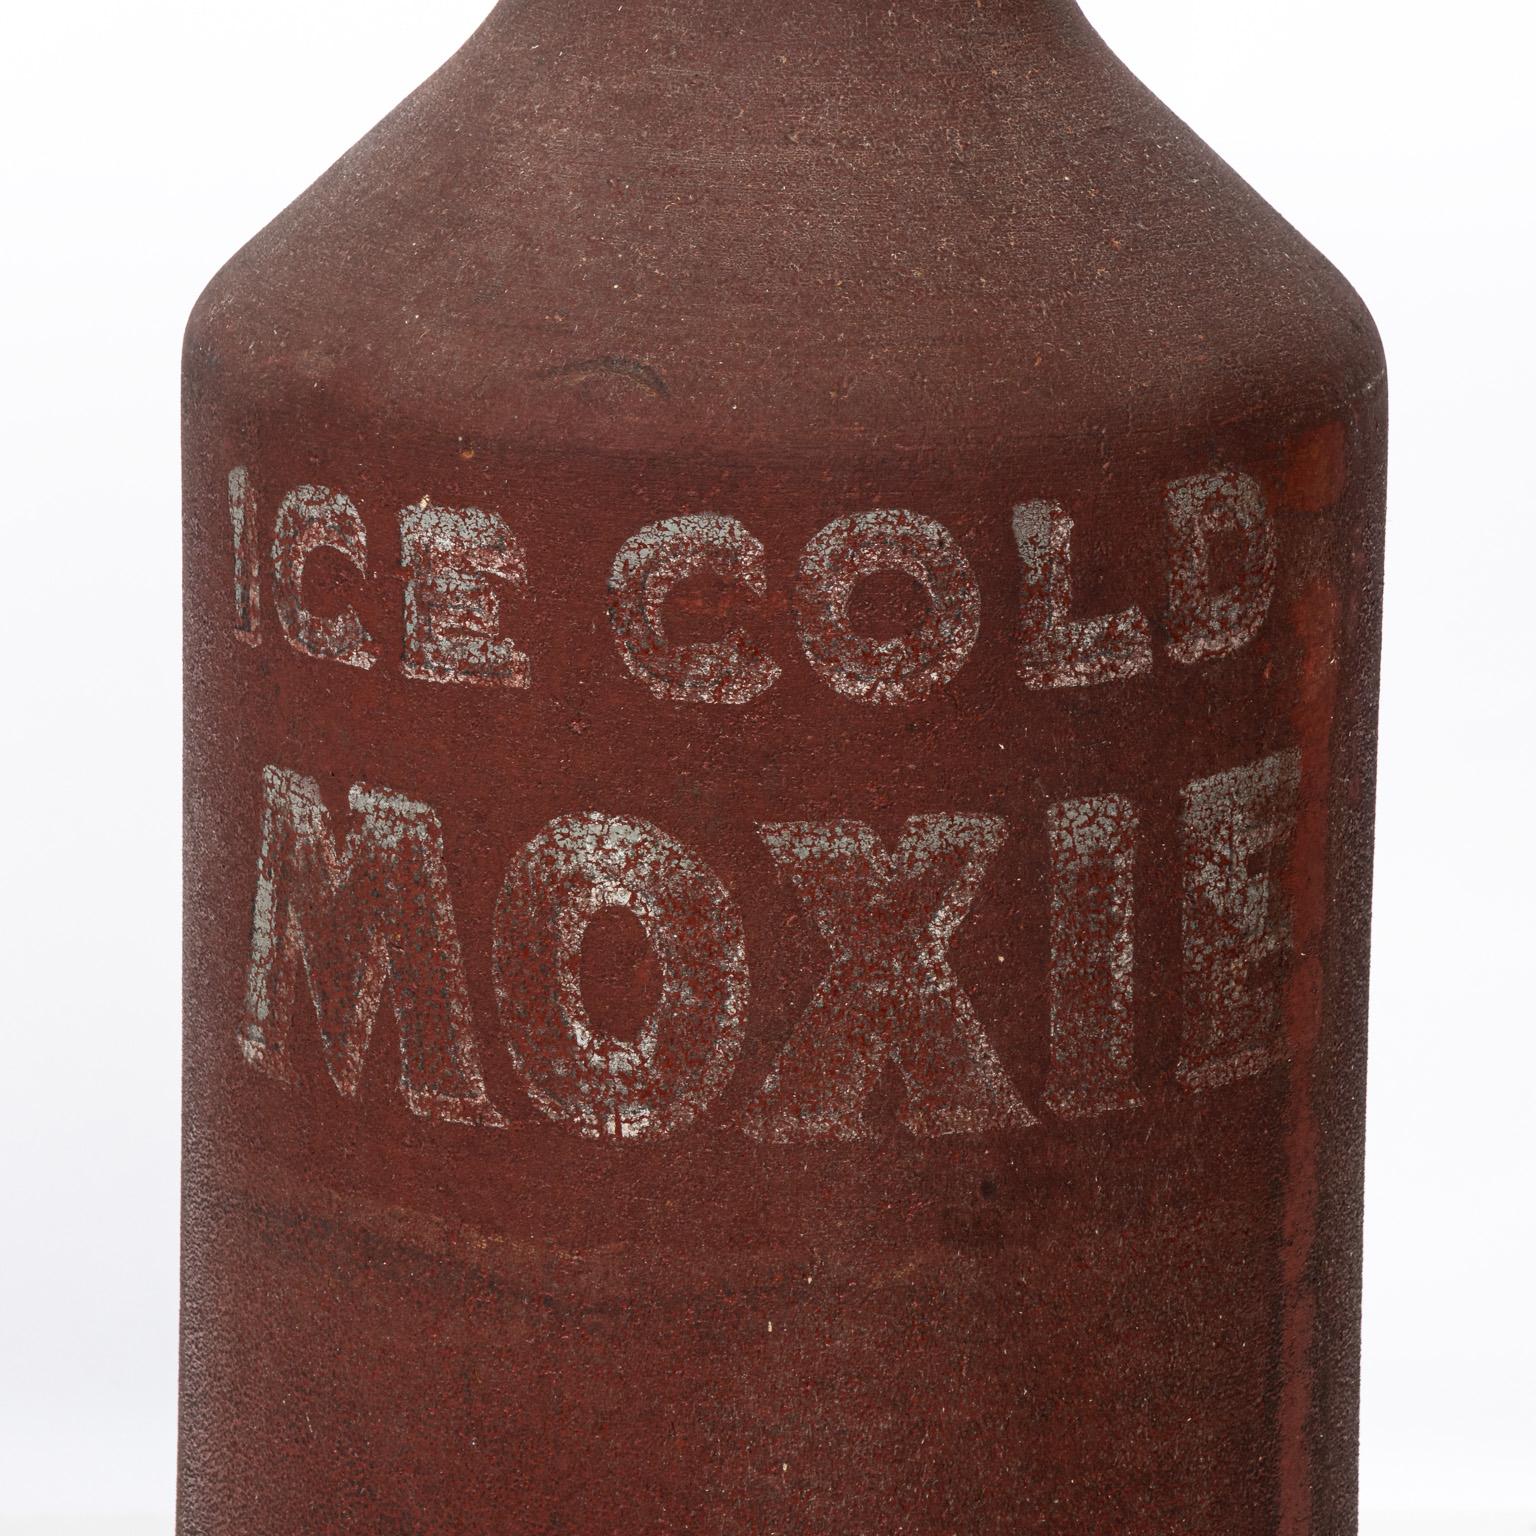 Fiberglass Ice Cold Moxie Advertising Bottle For Sale